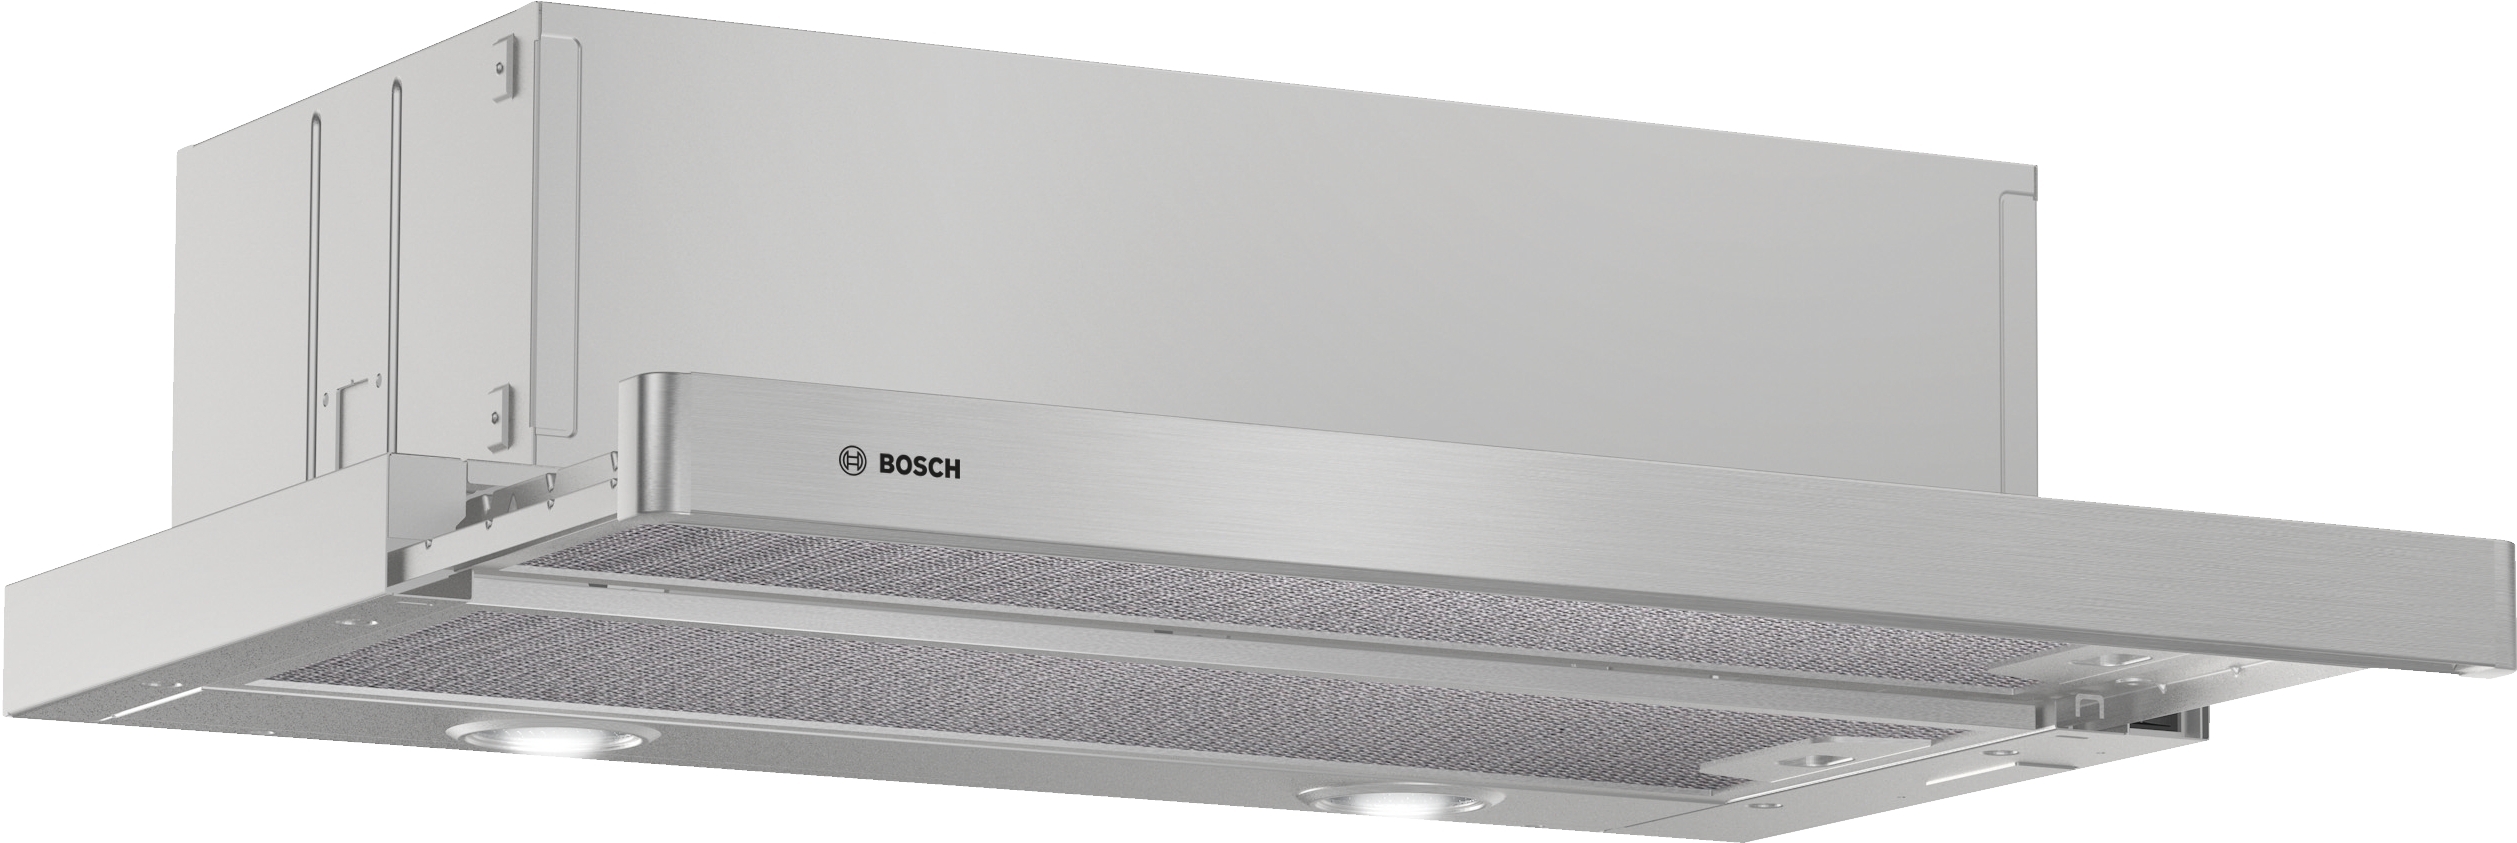 Bosch DFO060W51 - Serie 2